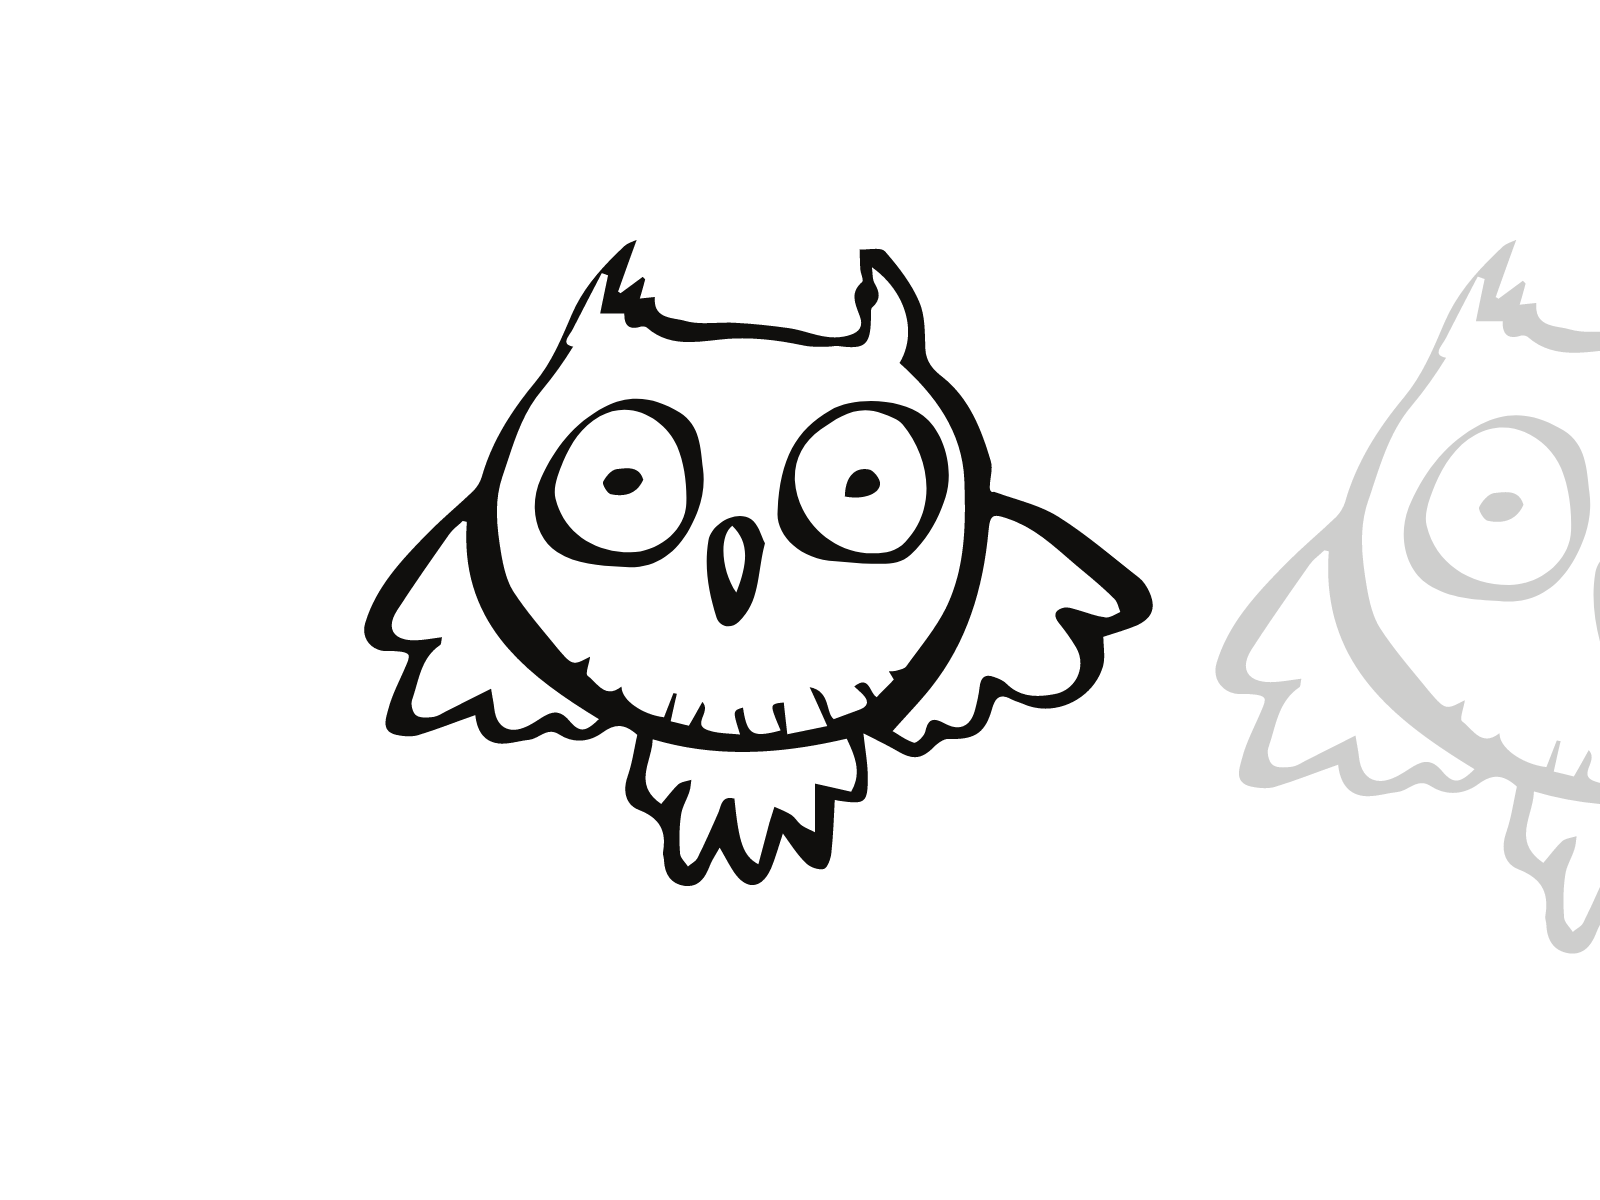 2. Black owl tattoos - wide 5